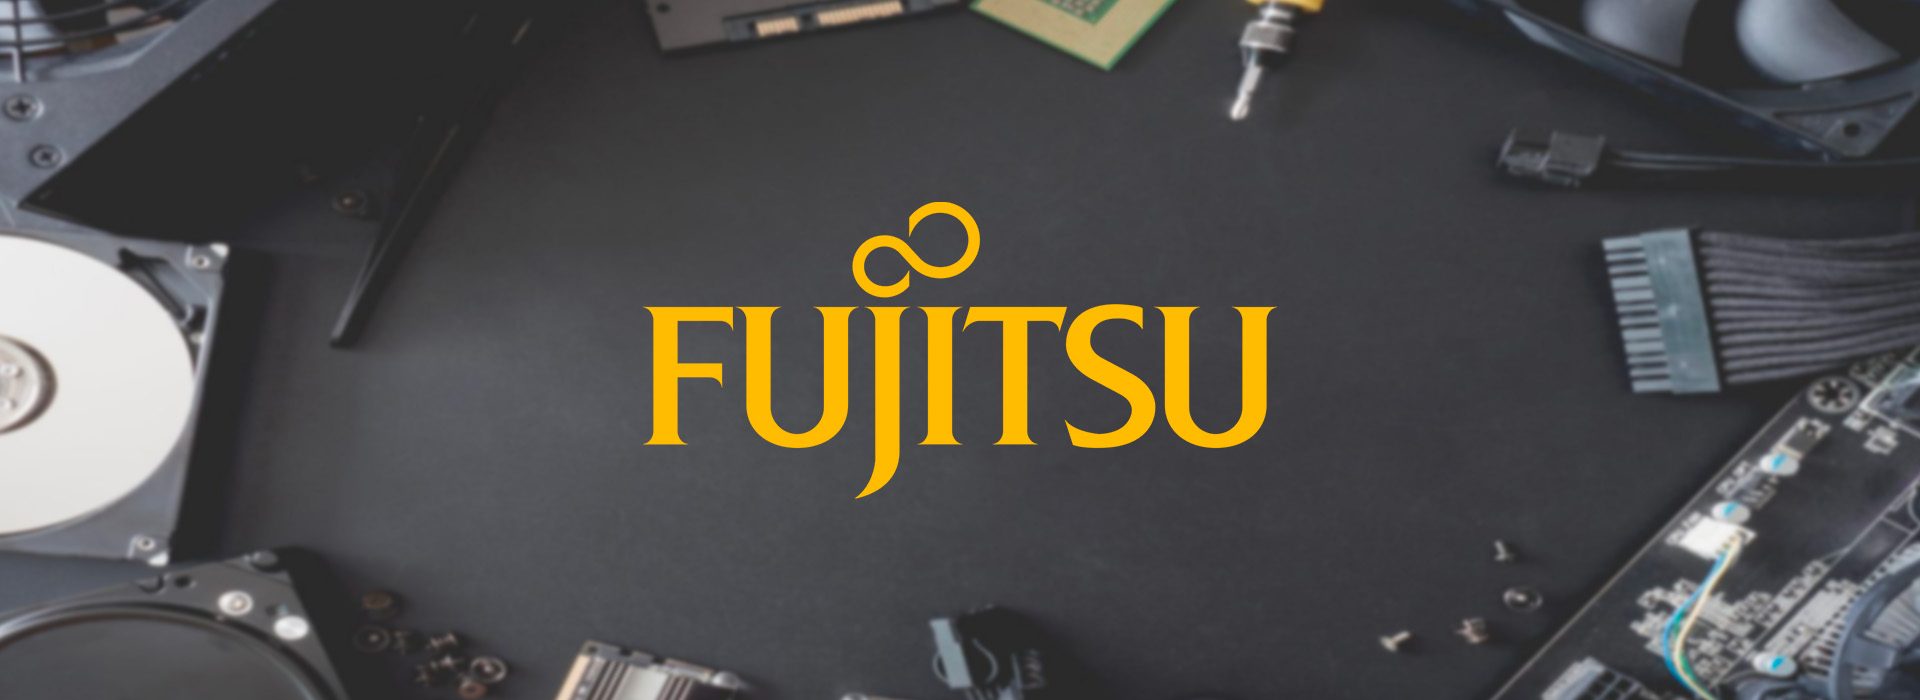 Fujitsu header 2